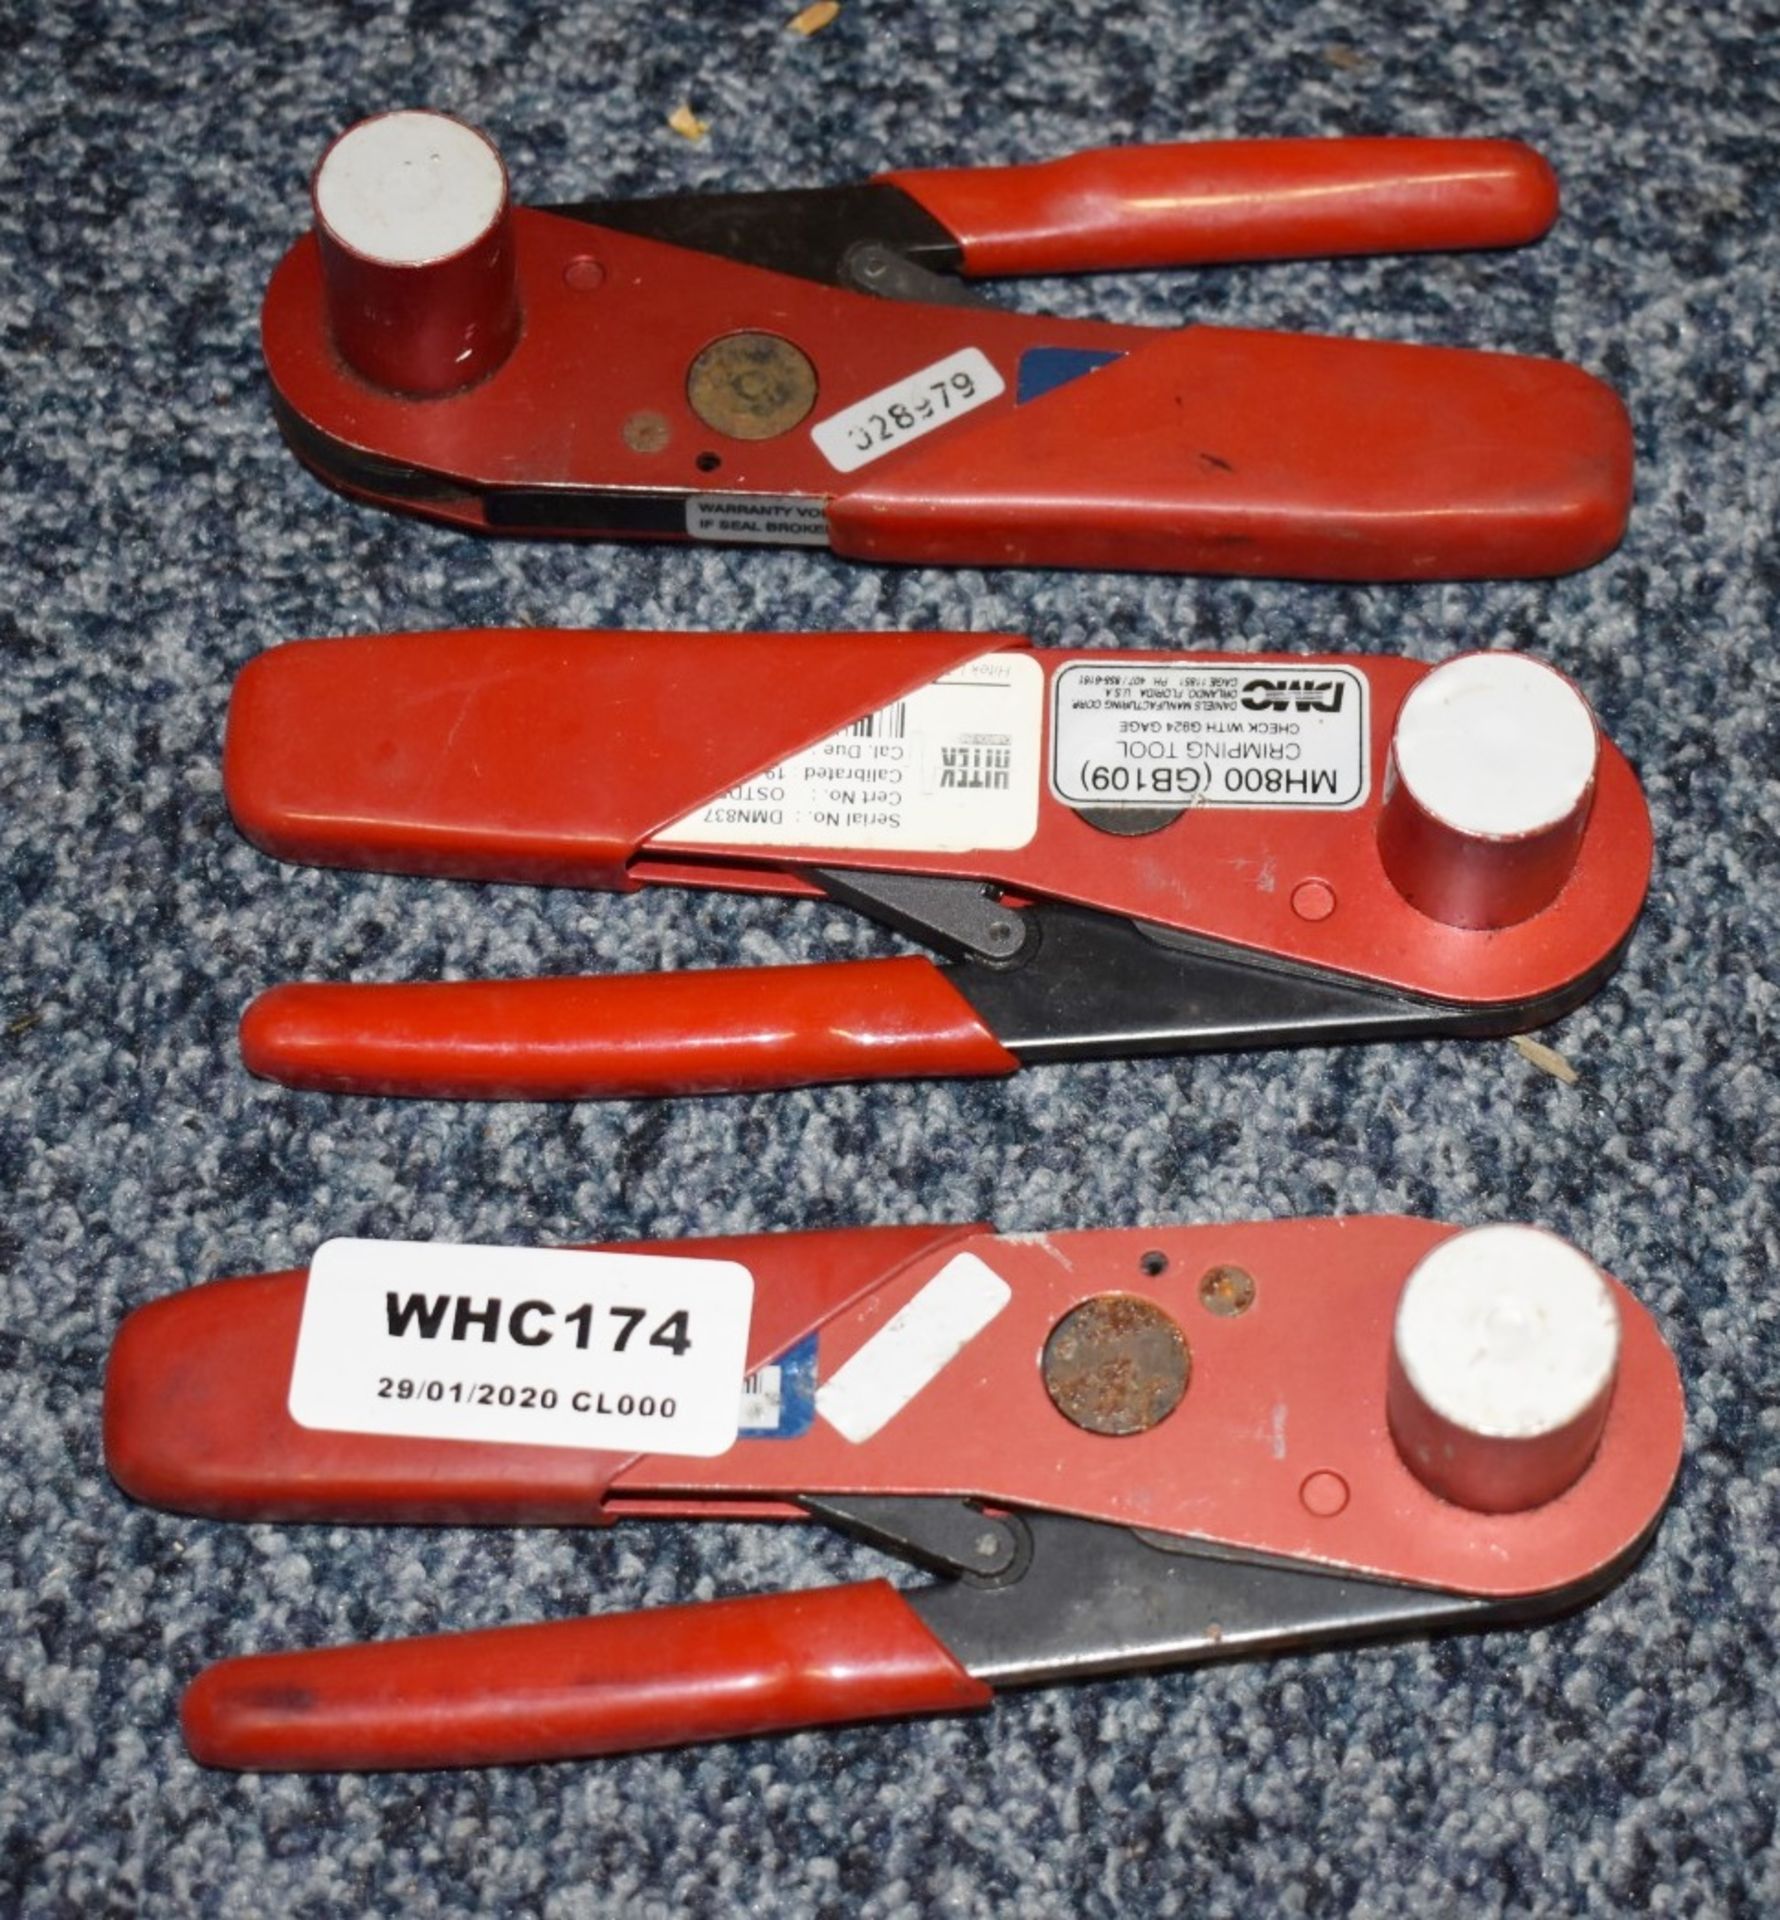 3 x DMC MH800 Crimping Tools - Ref WHC174 WH2 - CL011 - Location: Altrincham WA14